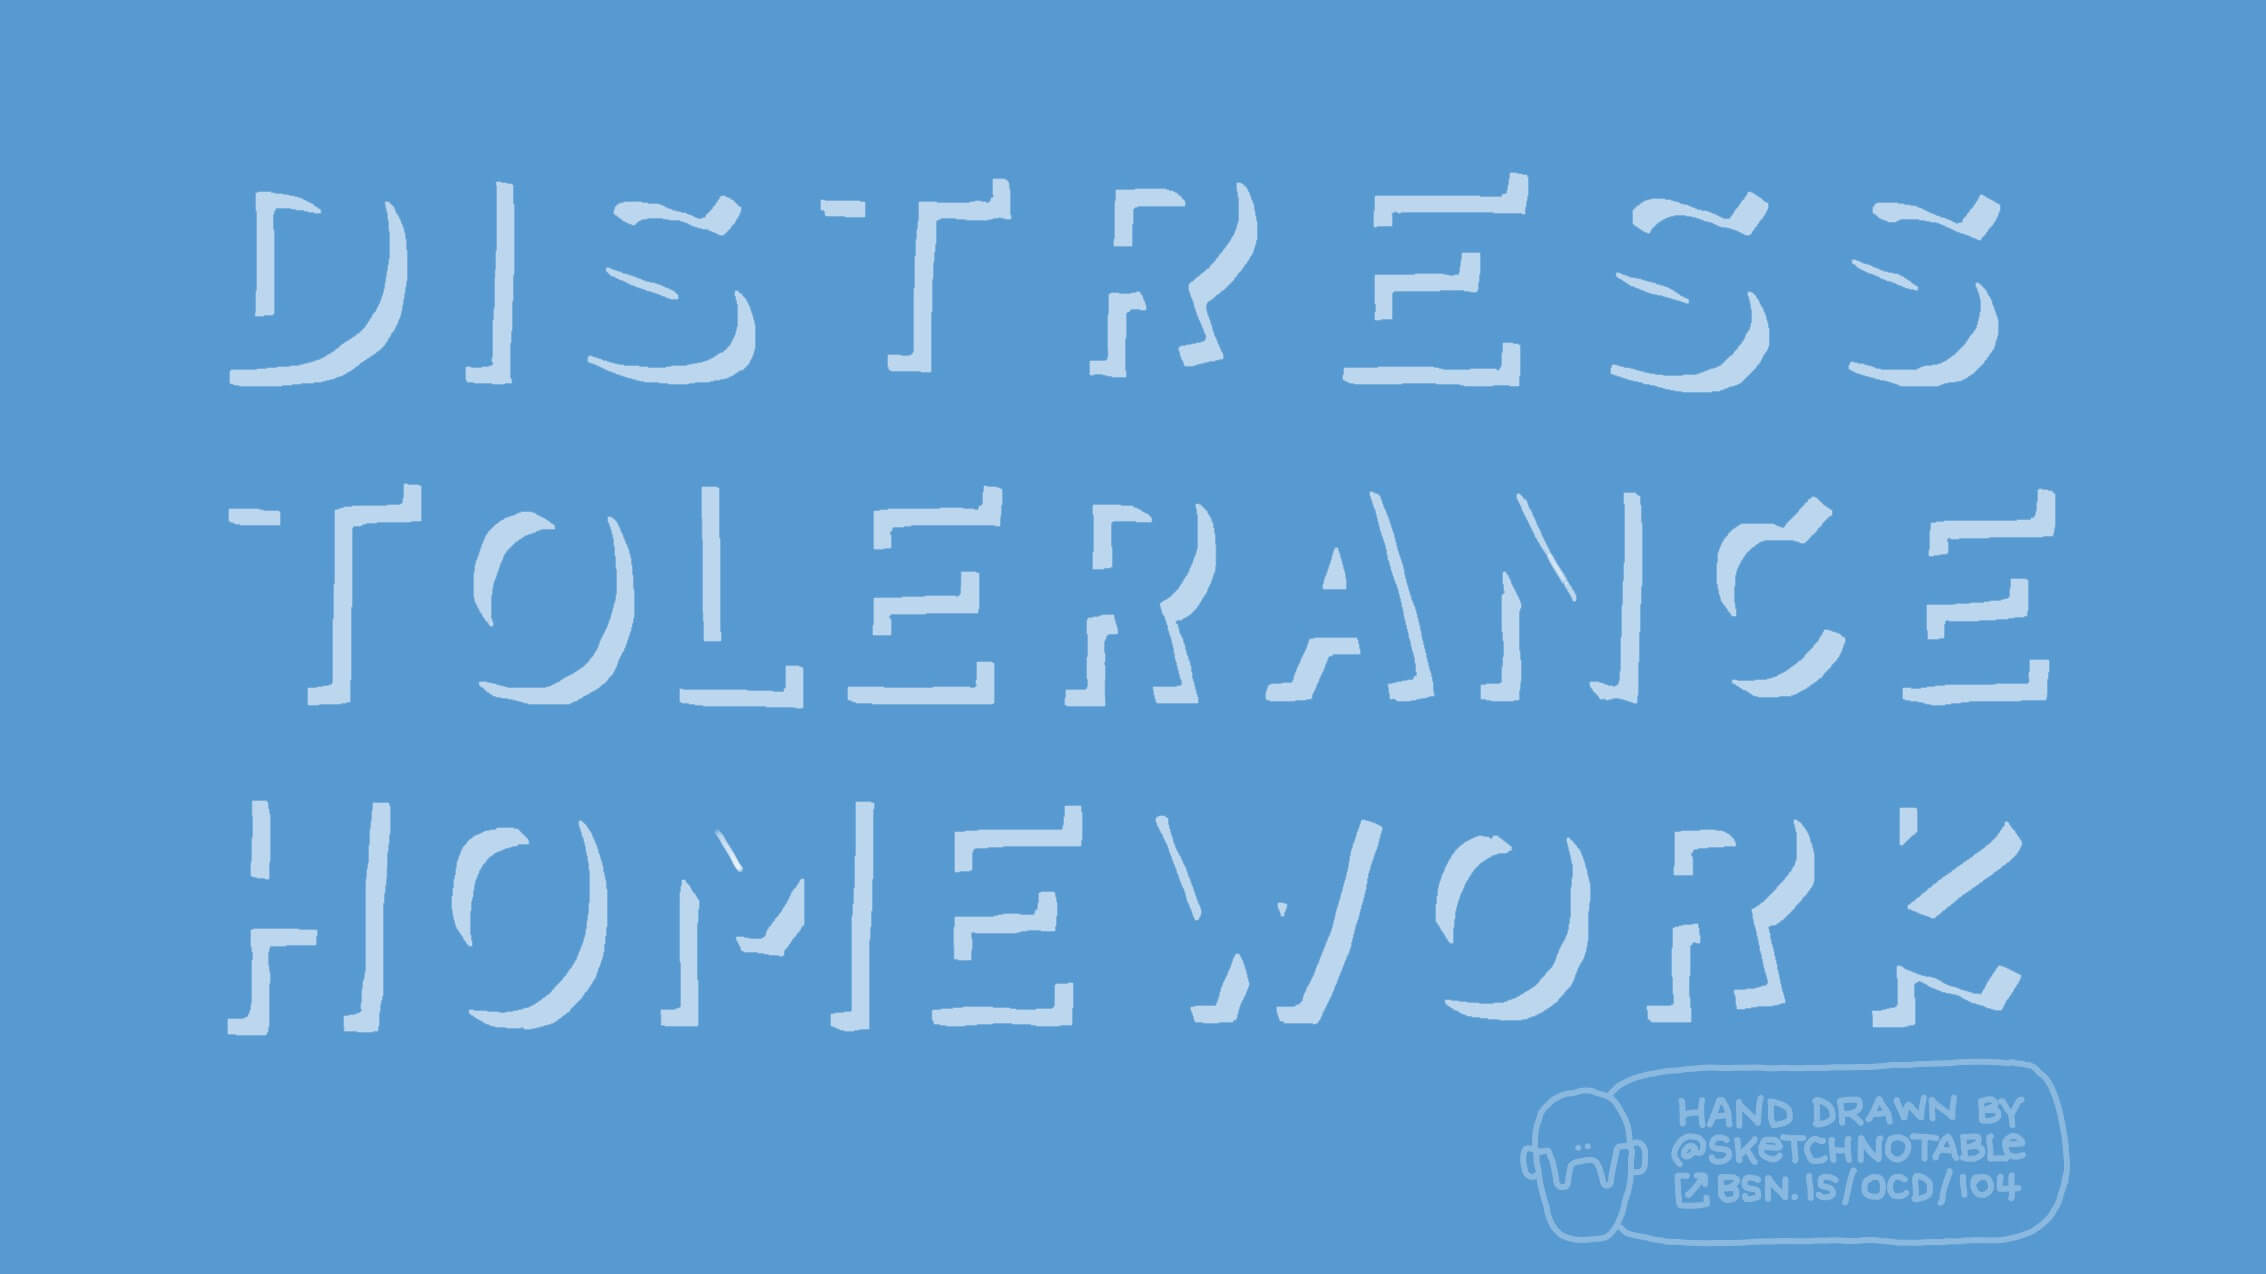 Distress tolerance homework